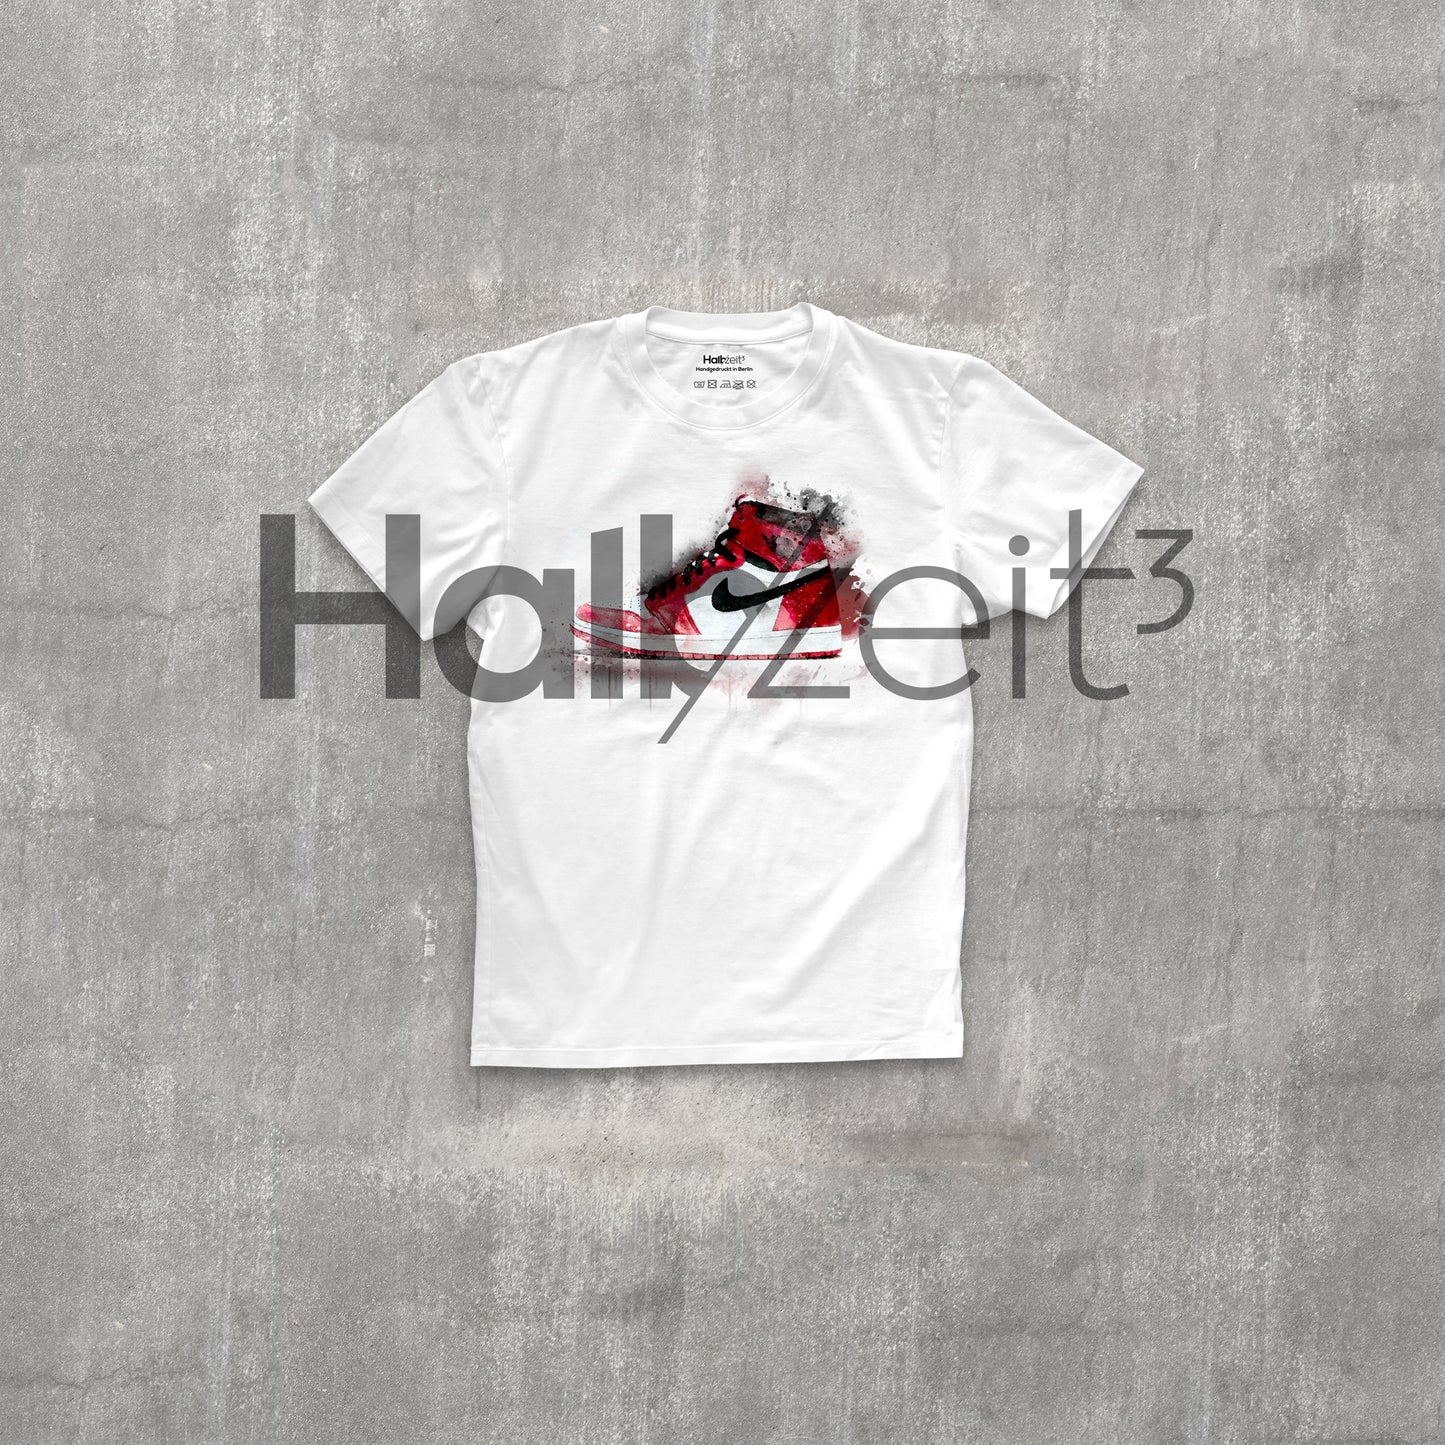 Halbzeit3 - T-Shirt AM 1 Side white